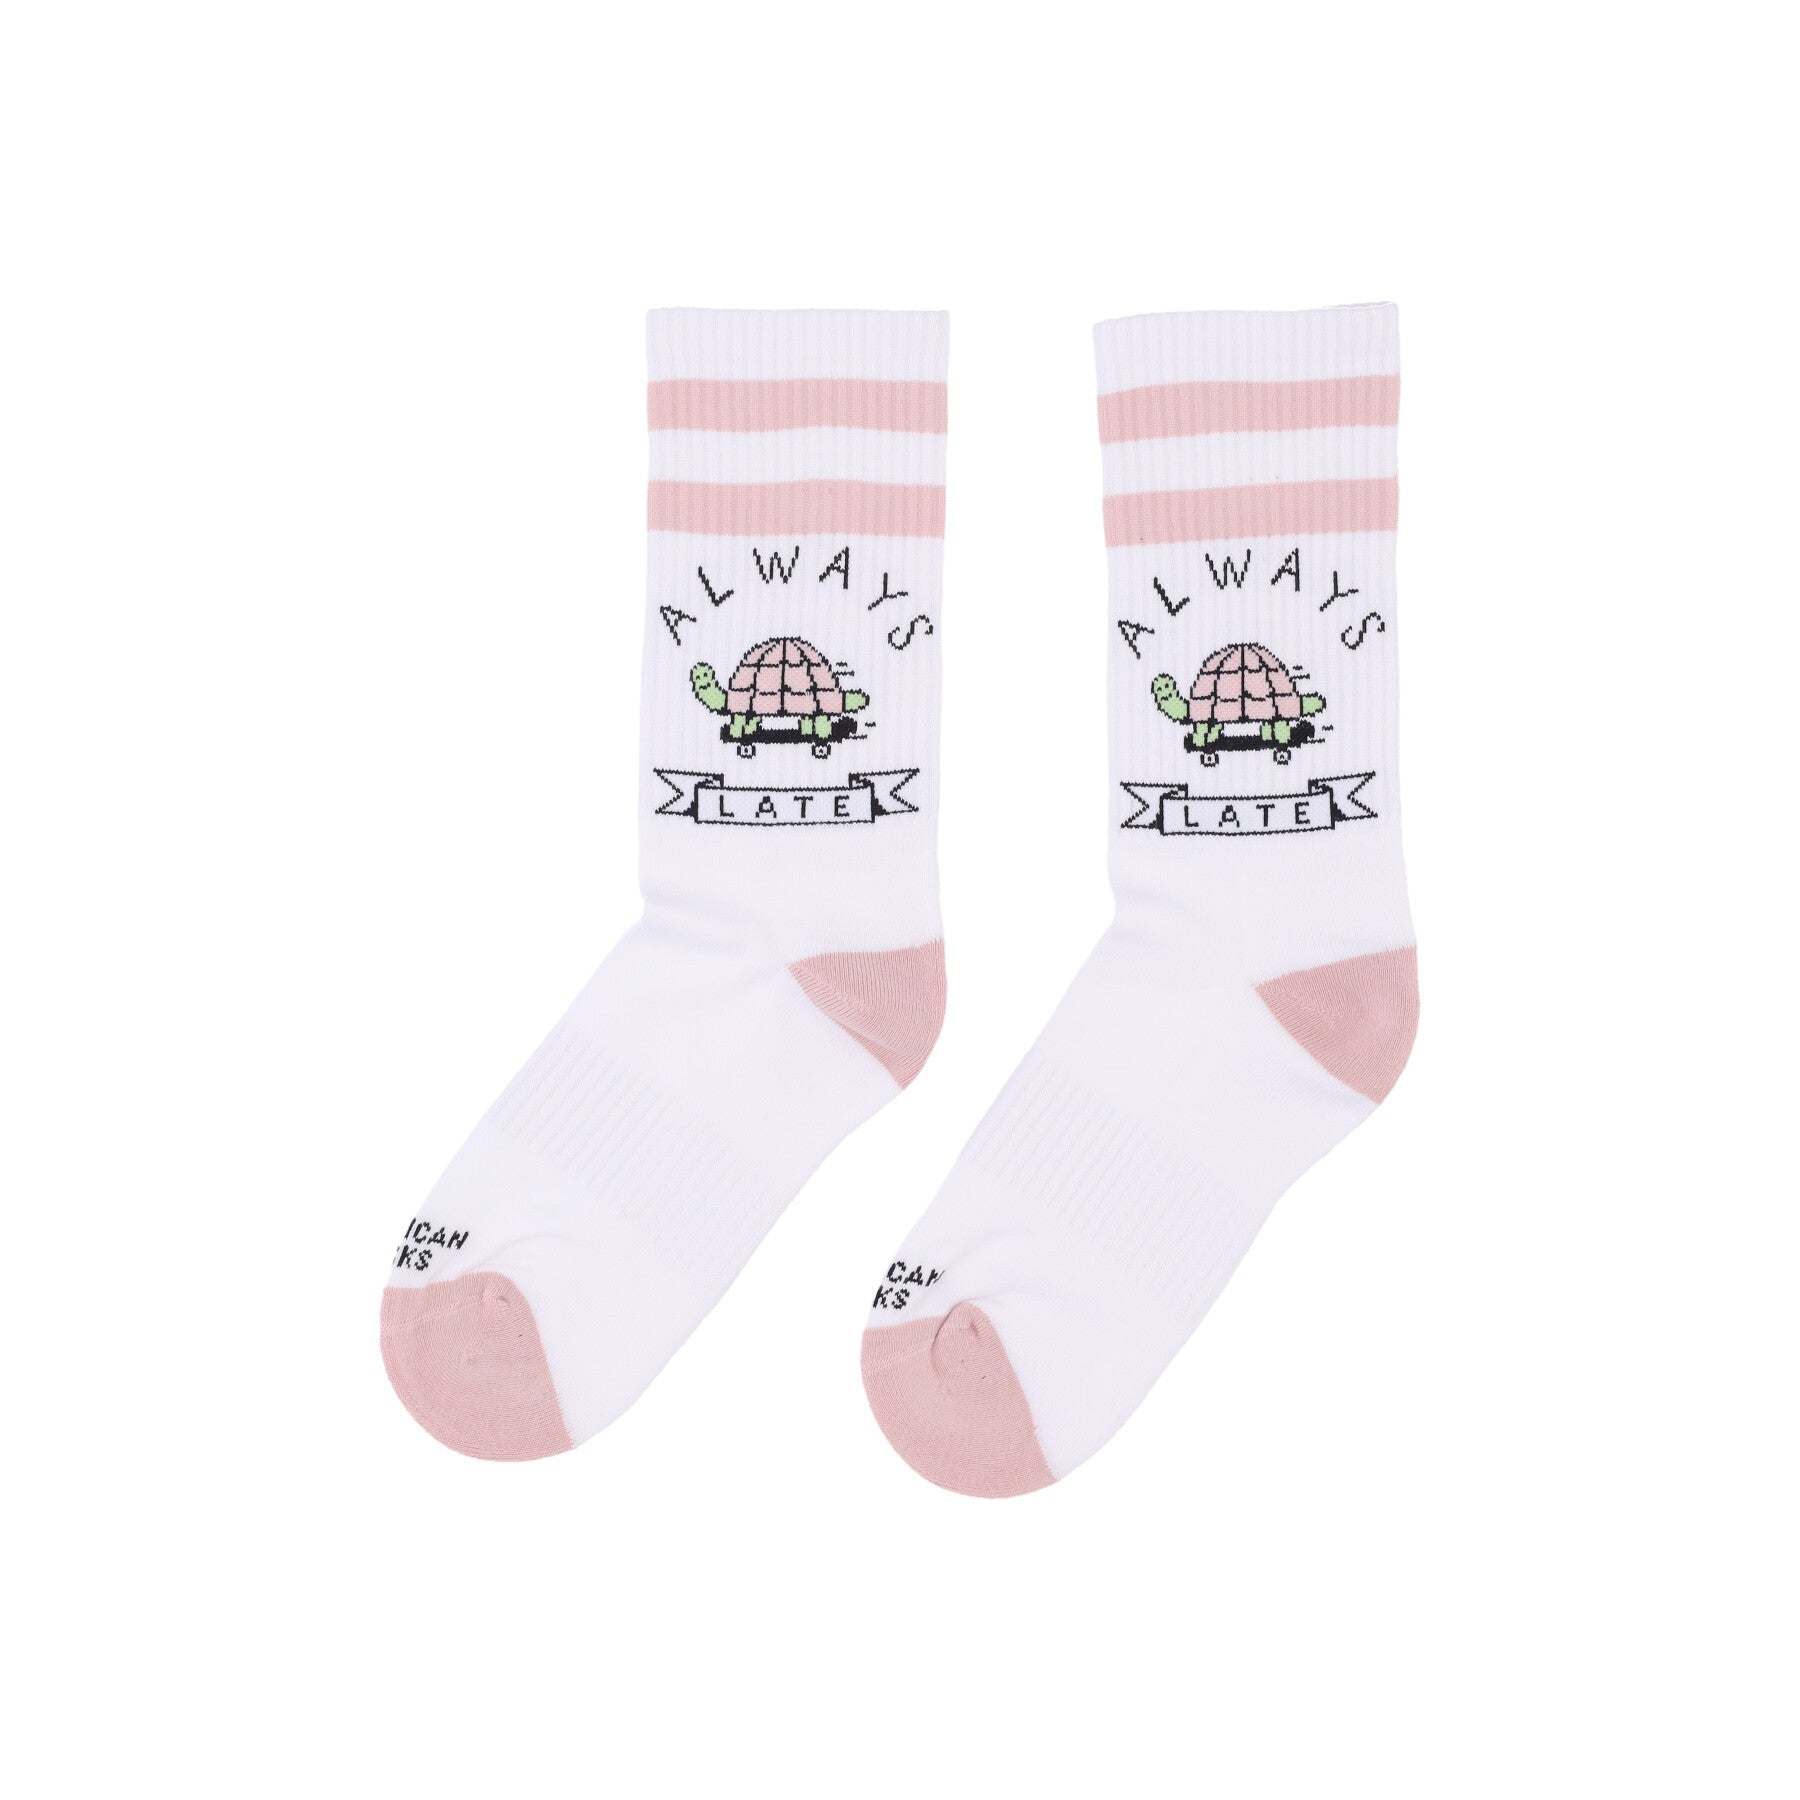 Medium Men's Sock Mid High Always Late White/pink